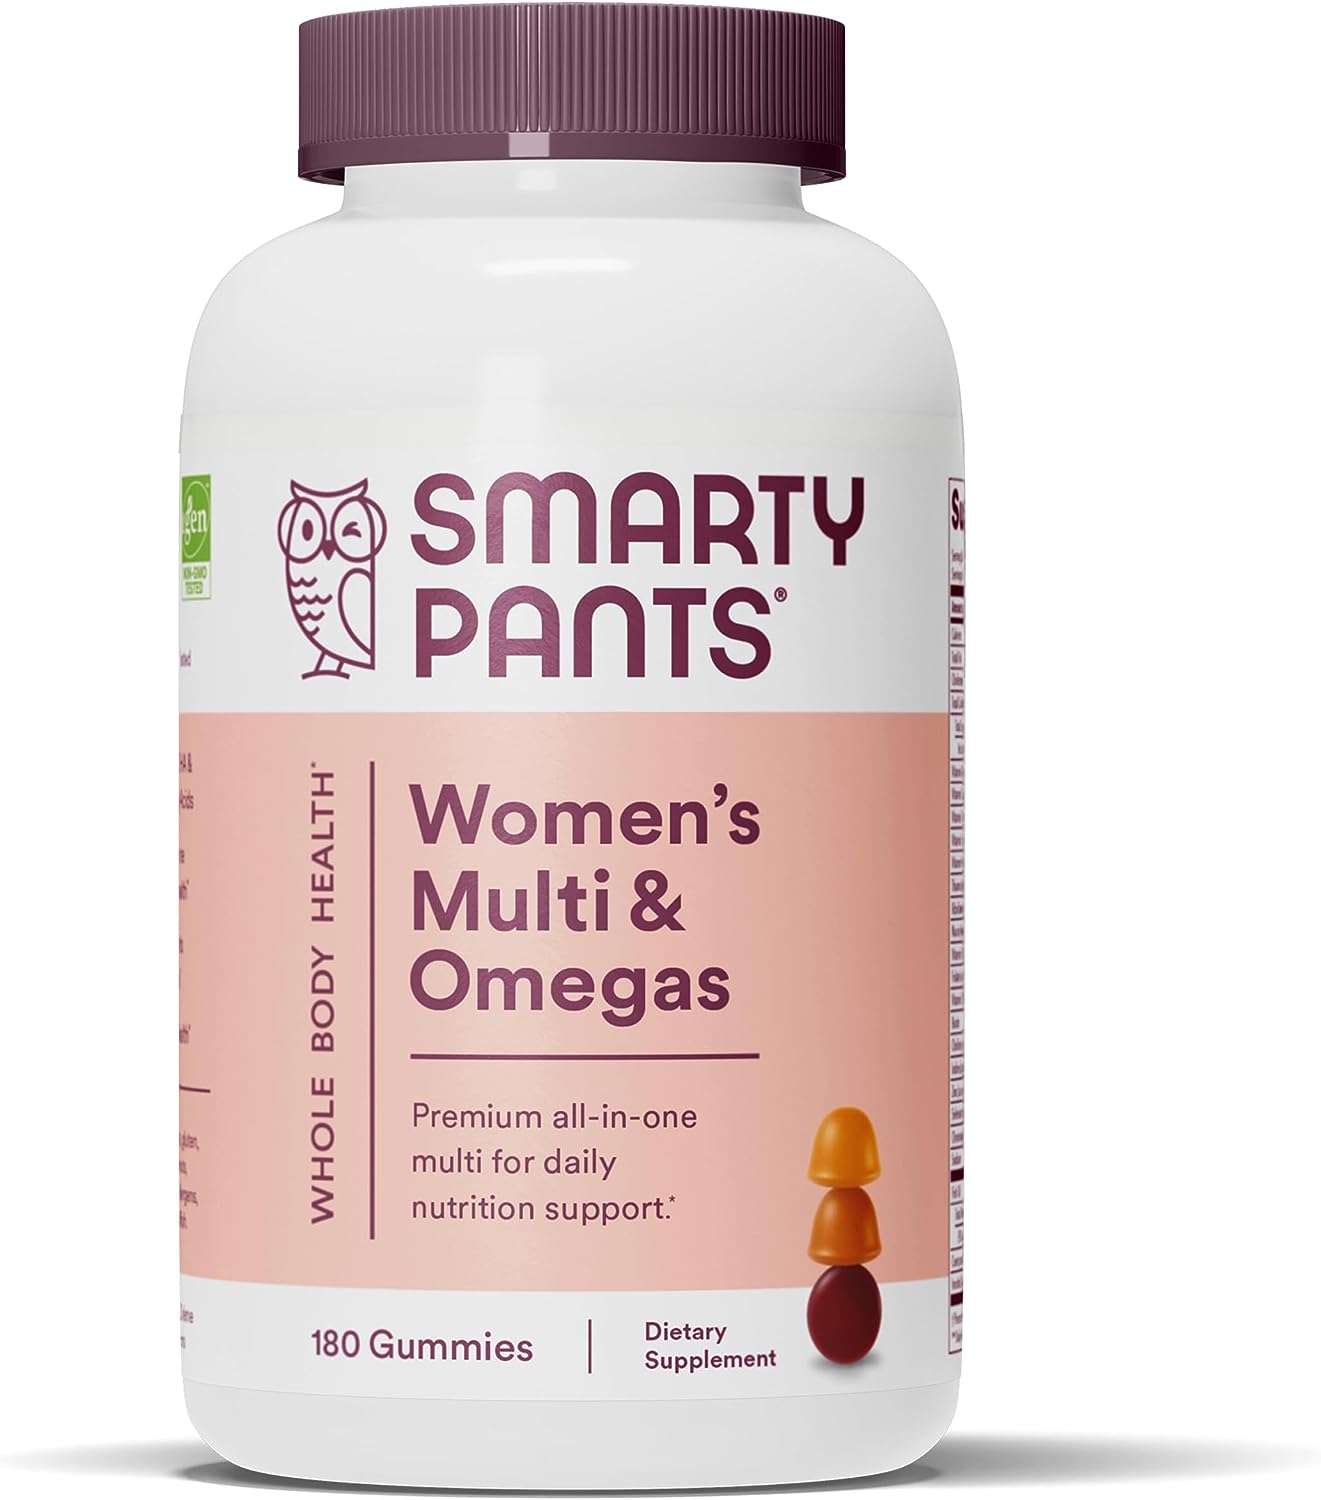 SmartyPants Women's Formula Gummy Vitamins: Gluten Free, Multivitamin, CoQ10, Folate (Methylfolate), Vitamin K2, Vitamin